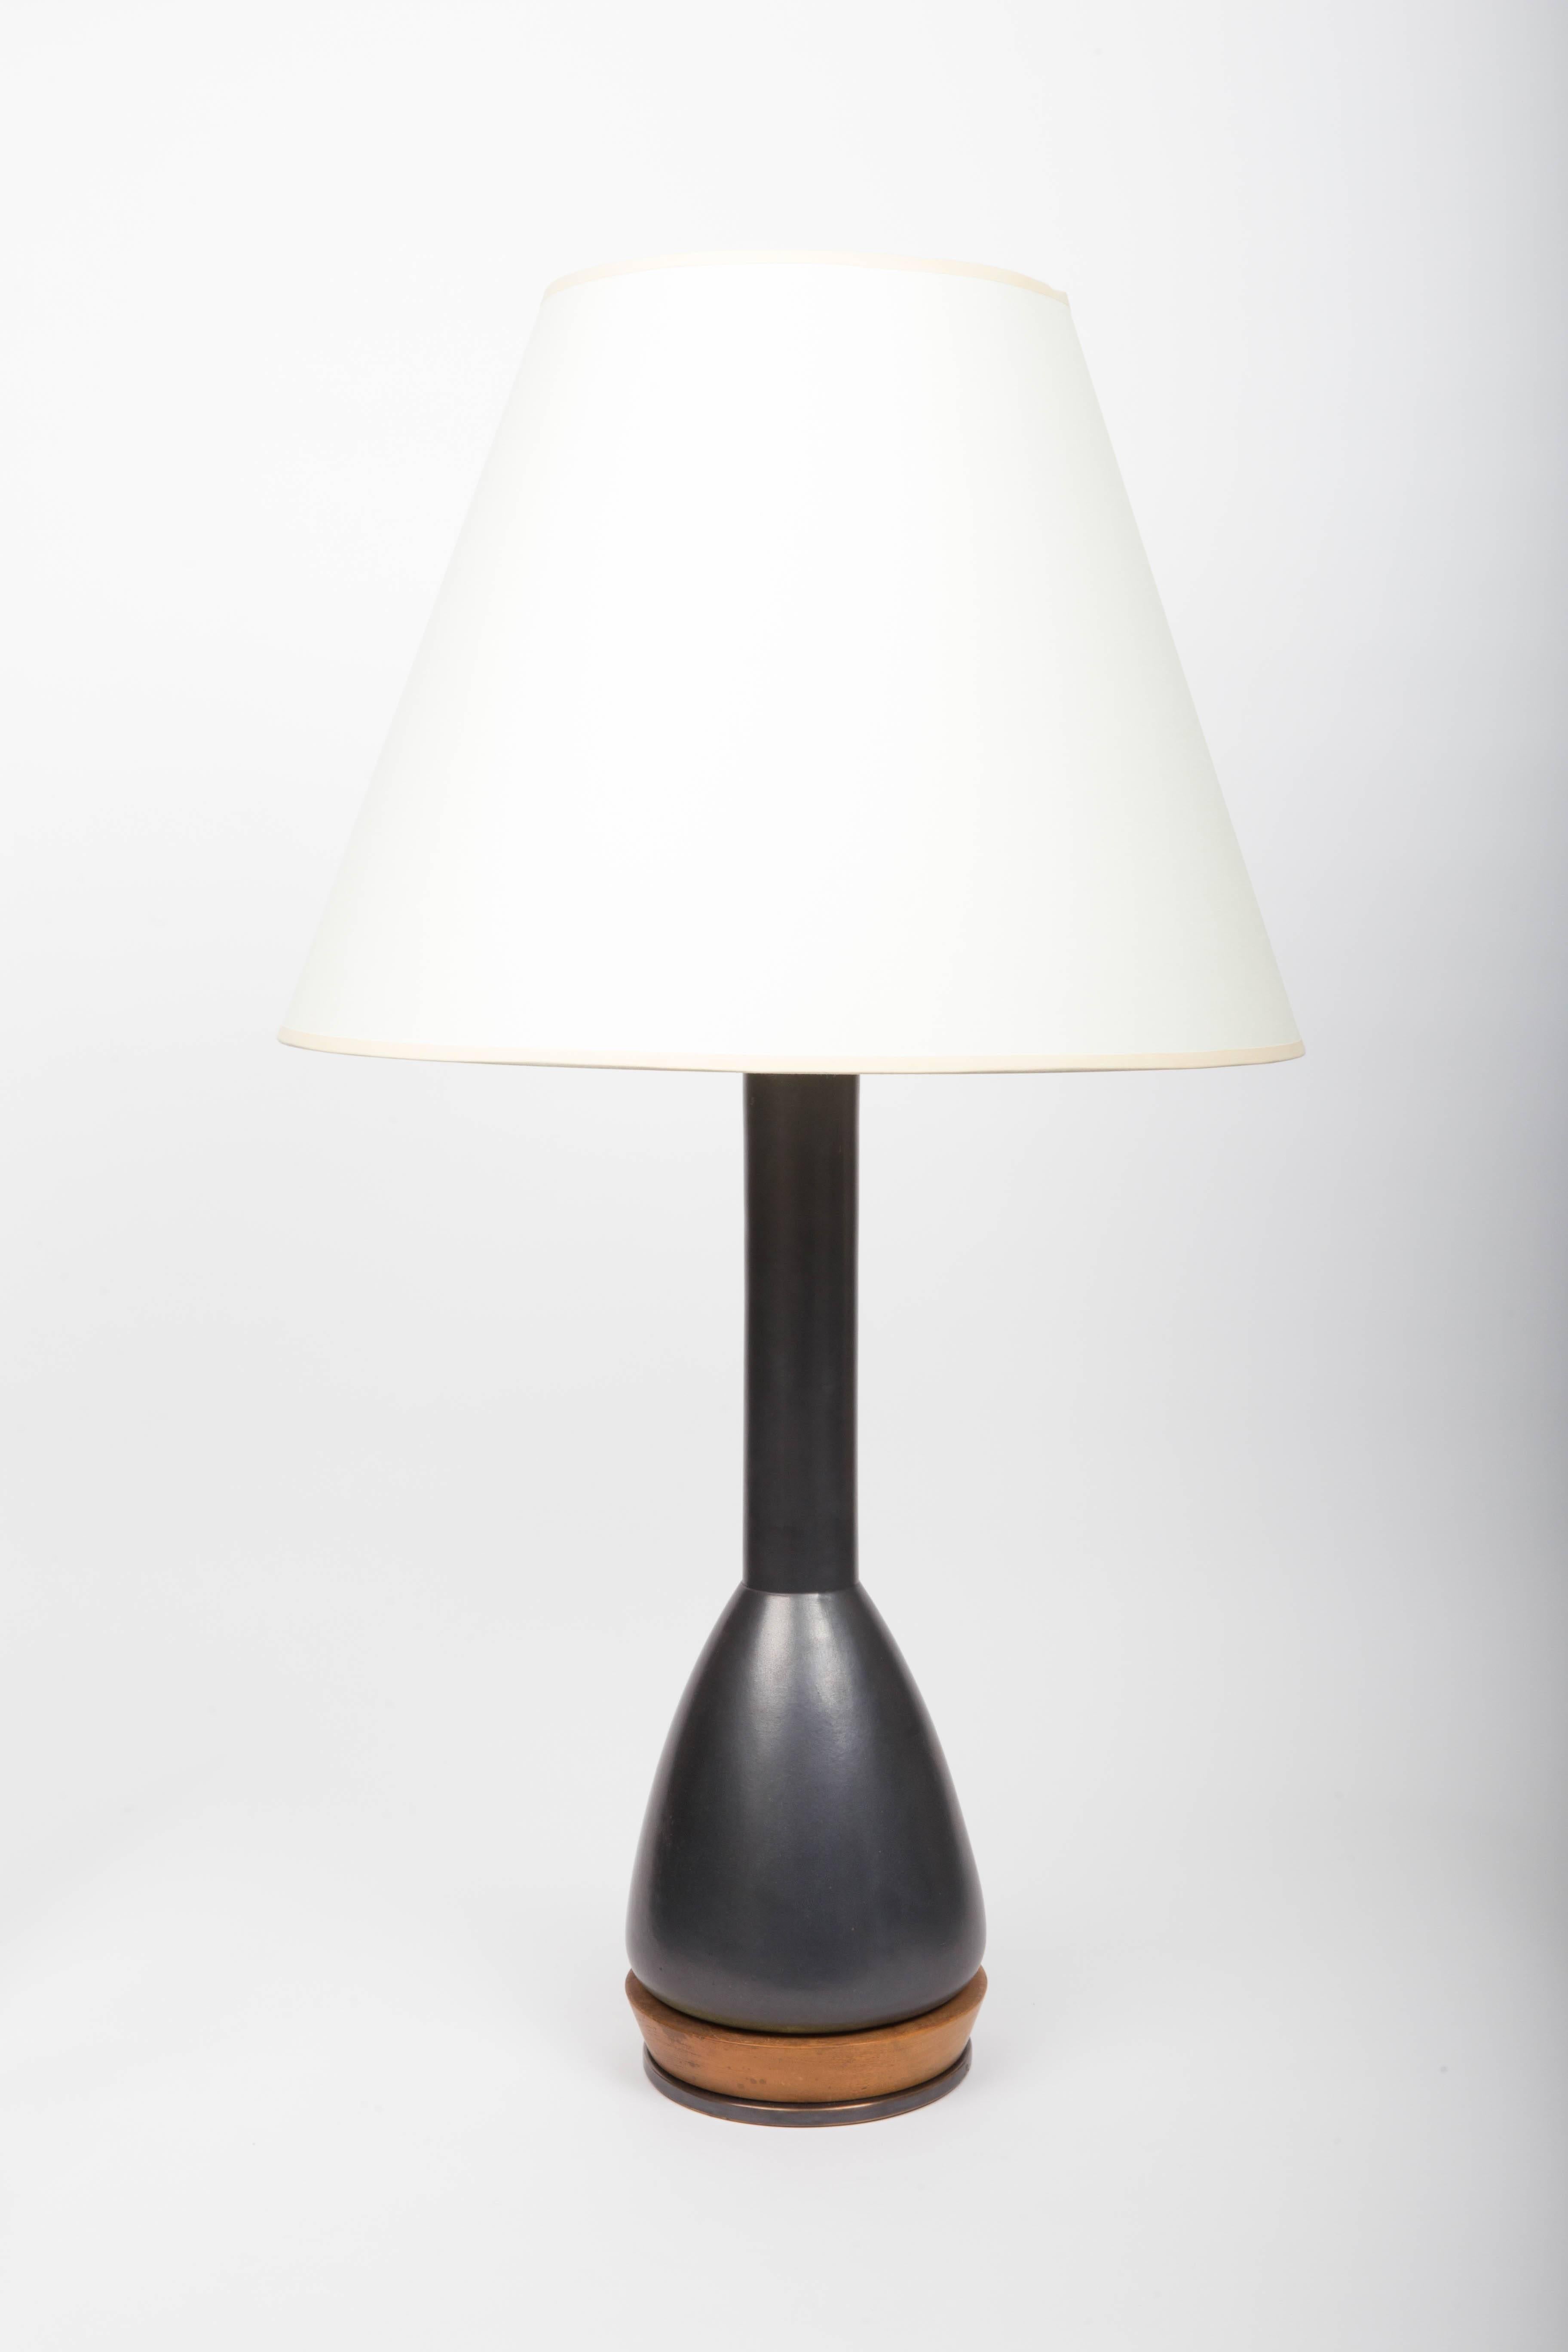 Bronze Black Ceramic Table Lamp Attributed to Gordon & Jane Martz, c. 1960s